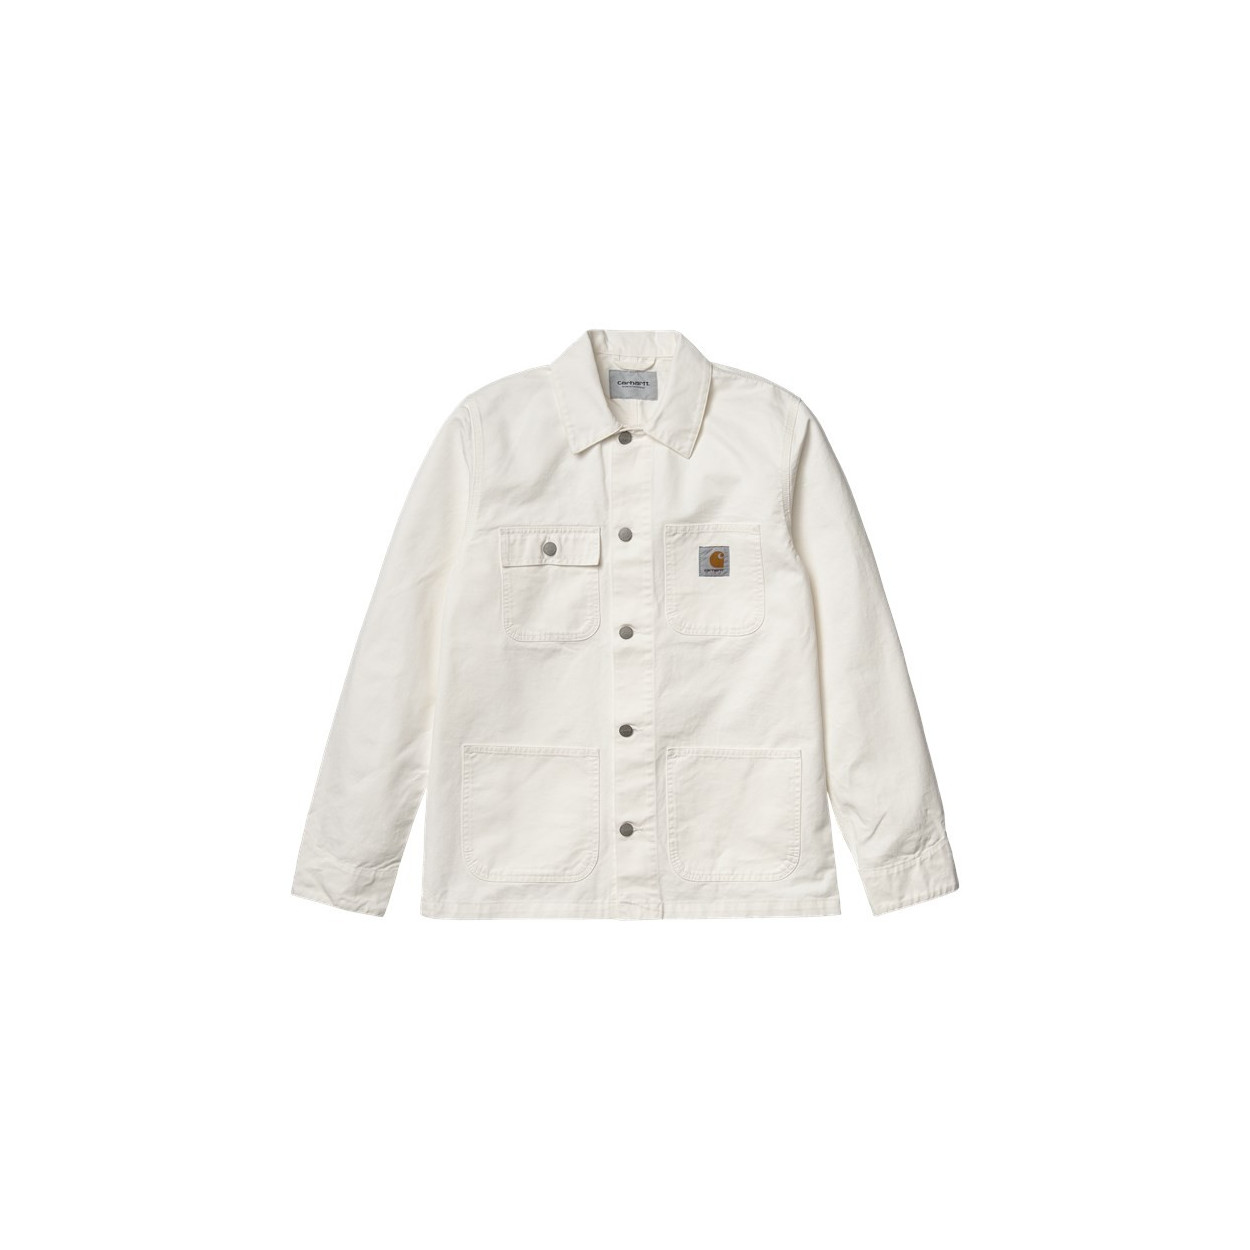 Veste Carhartt-wip Michigan jacket coloris blanc ecru référence I024849 chez CLOANE 